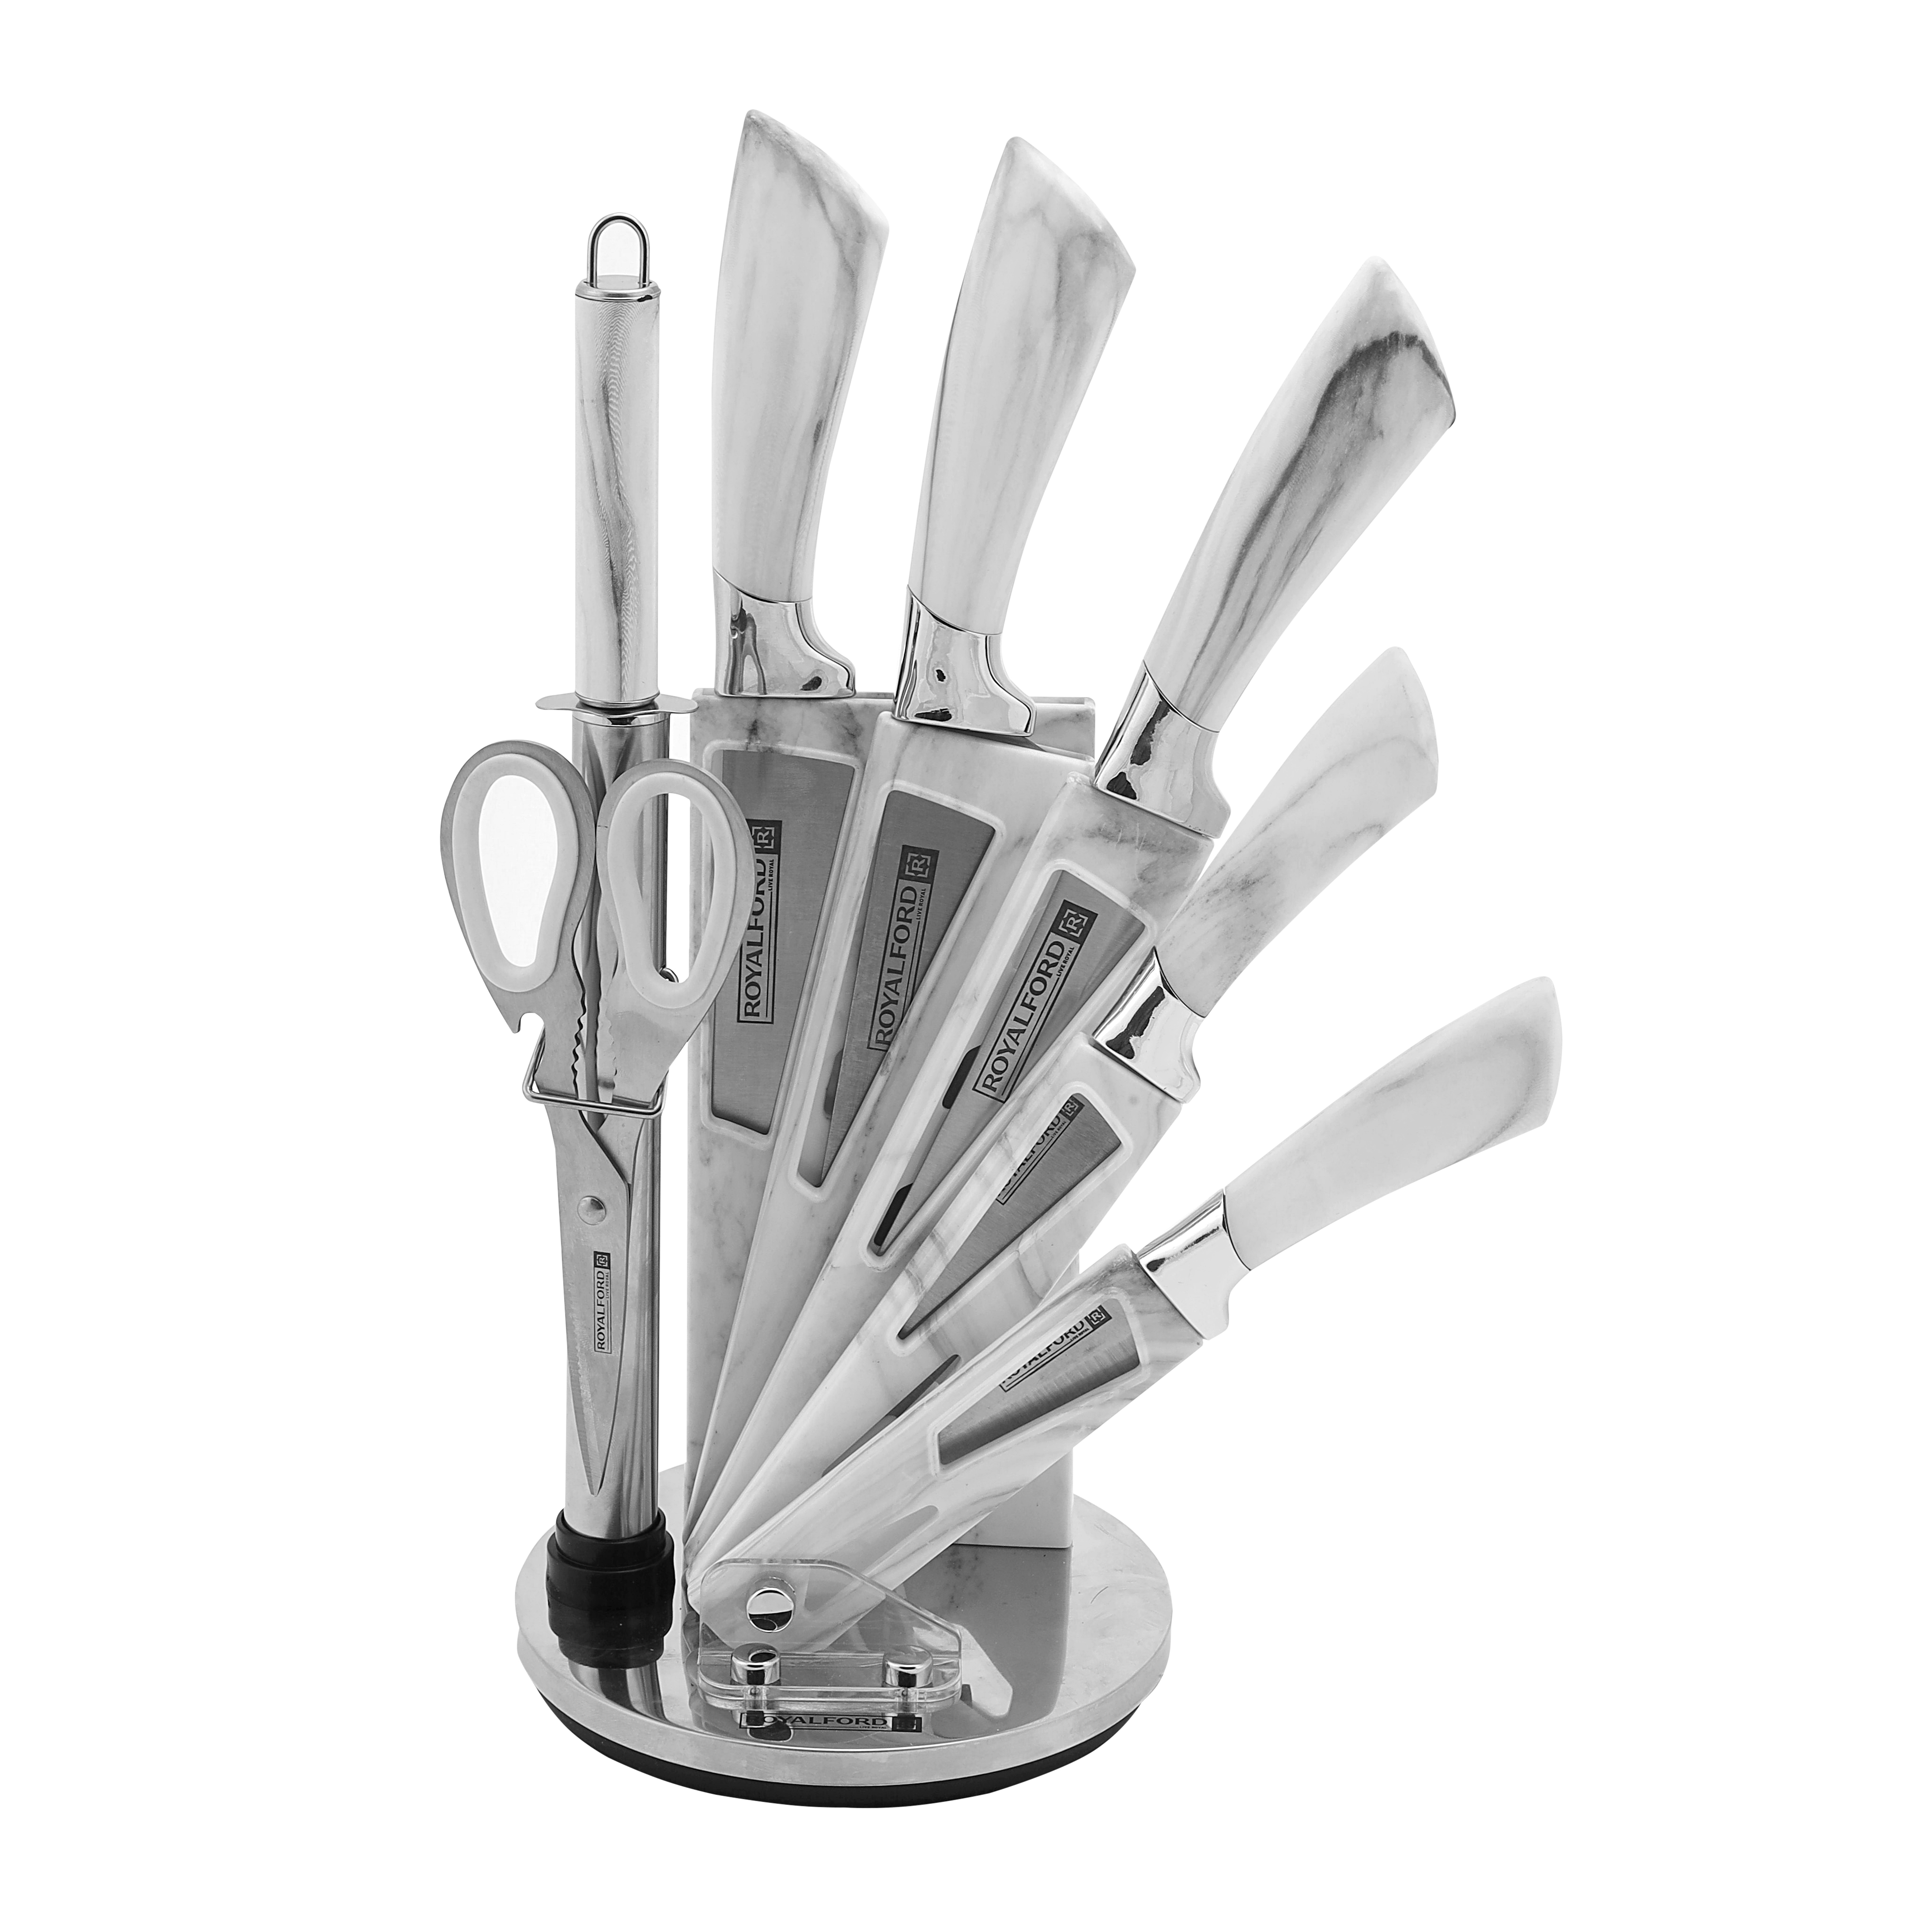 Ourshopee Kuwait - Kitchen King 18 Piece Knife Set